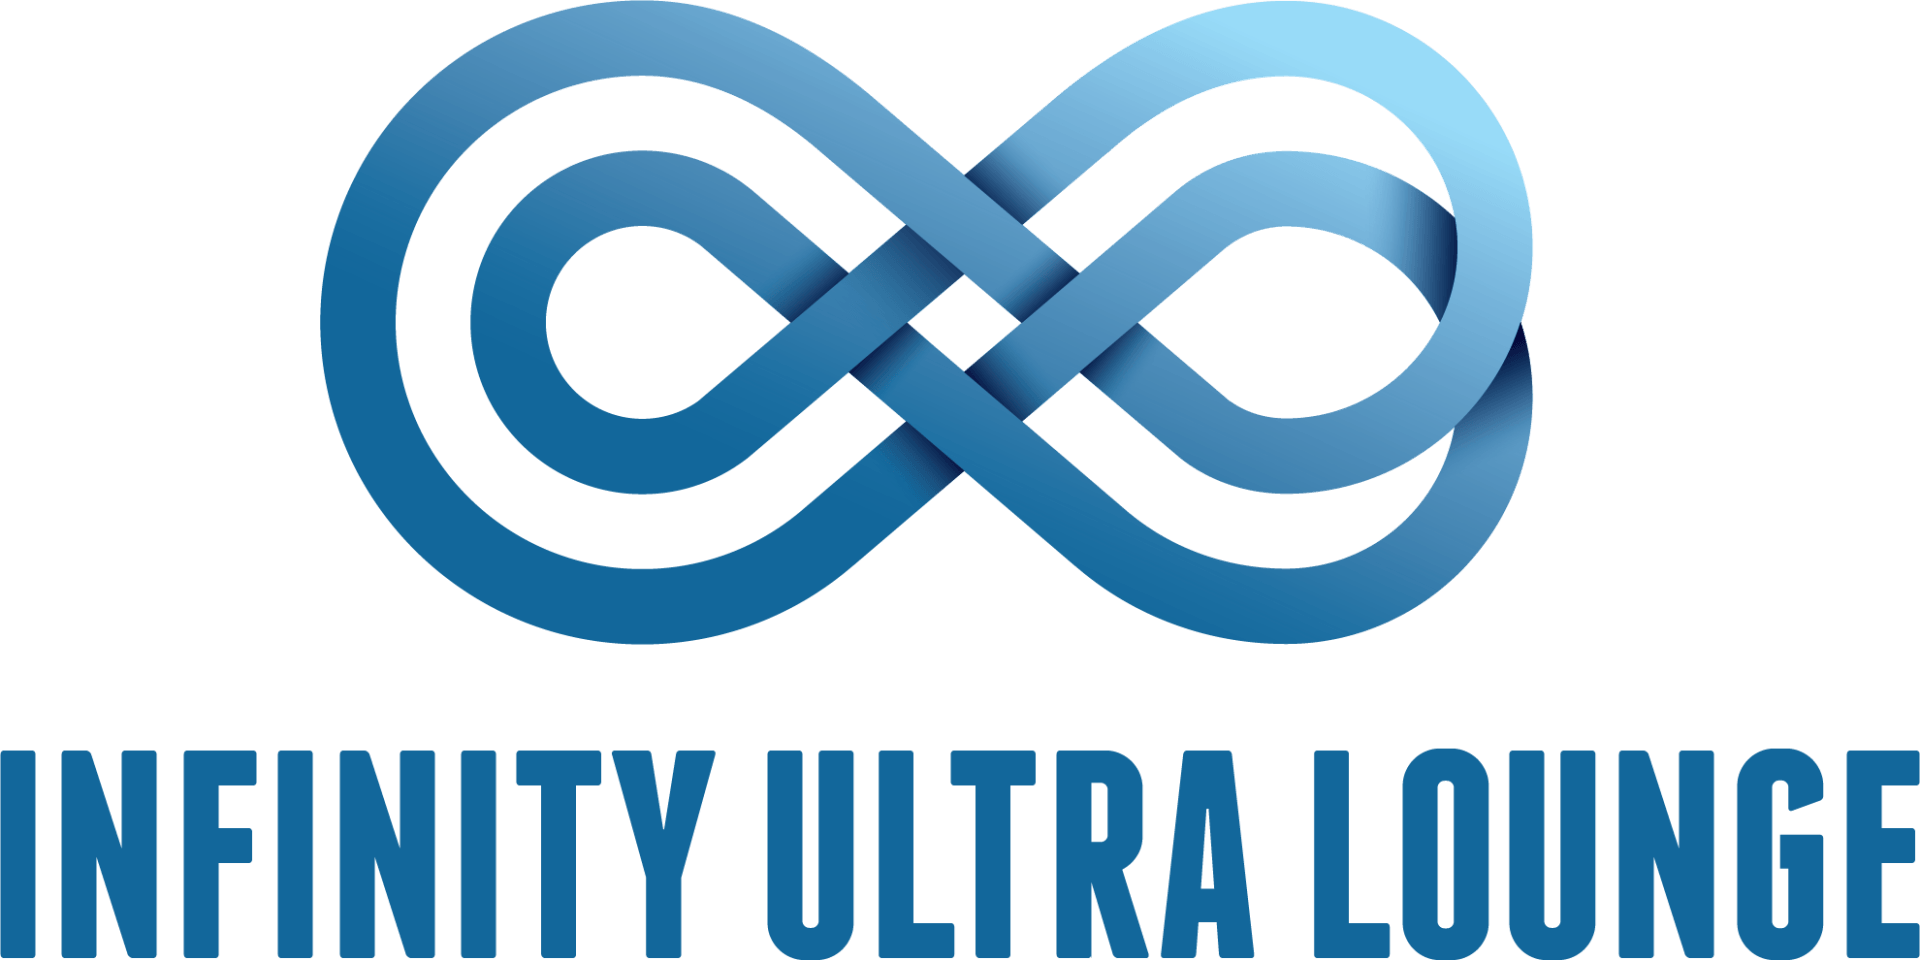 Infinity ultra lounge logo